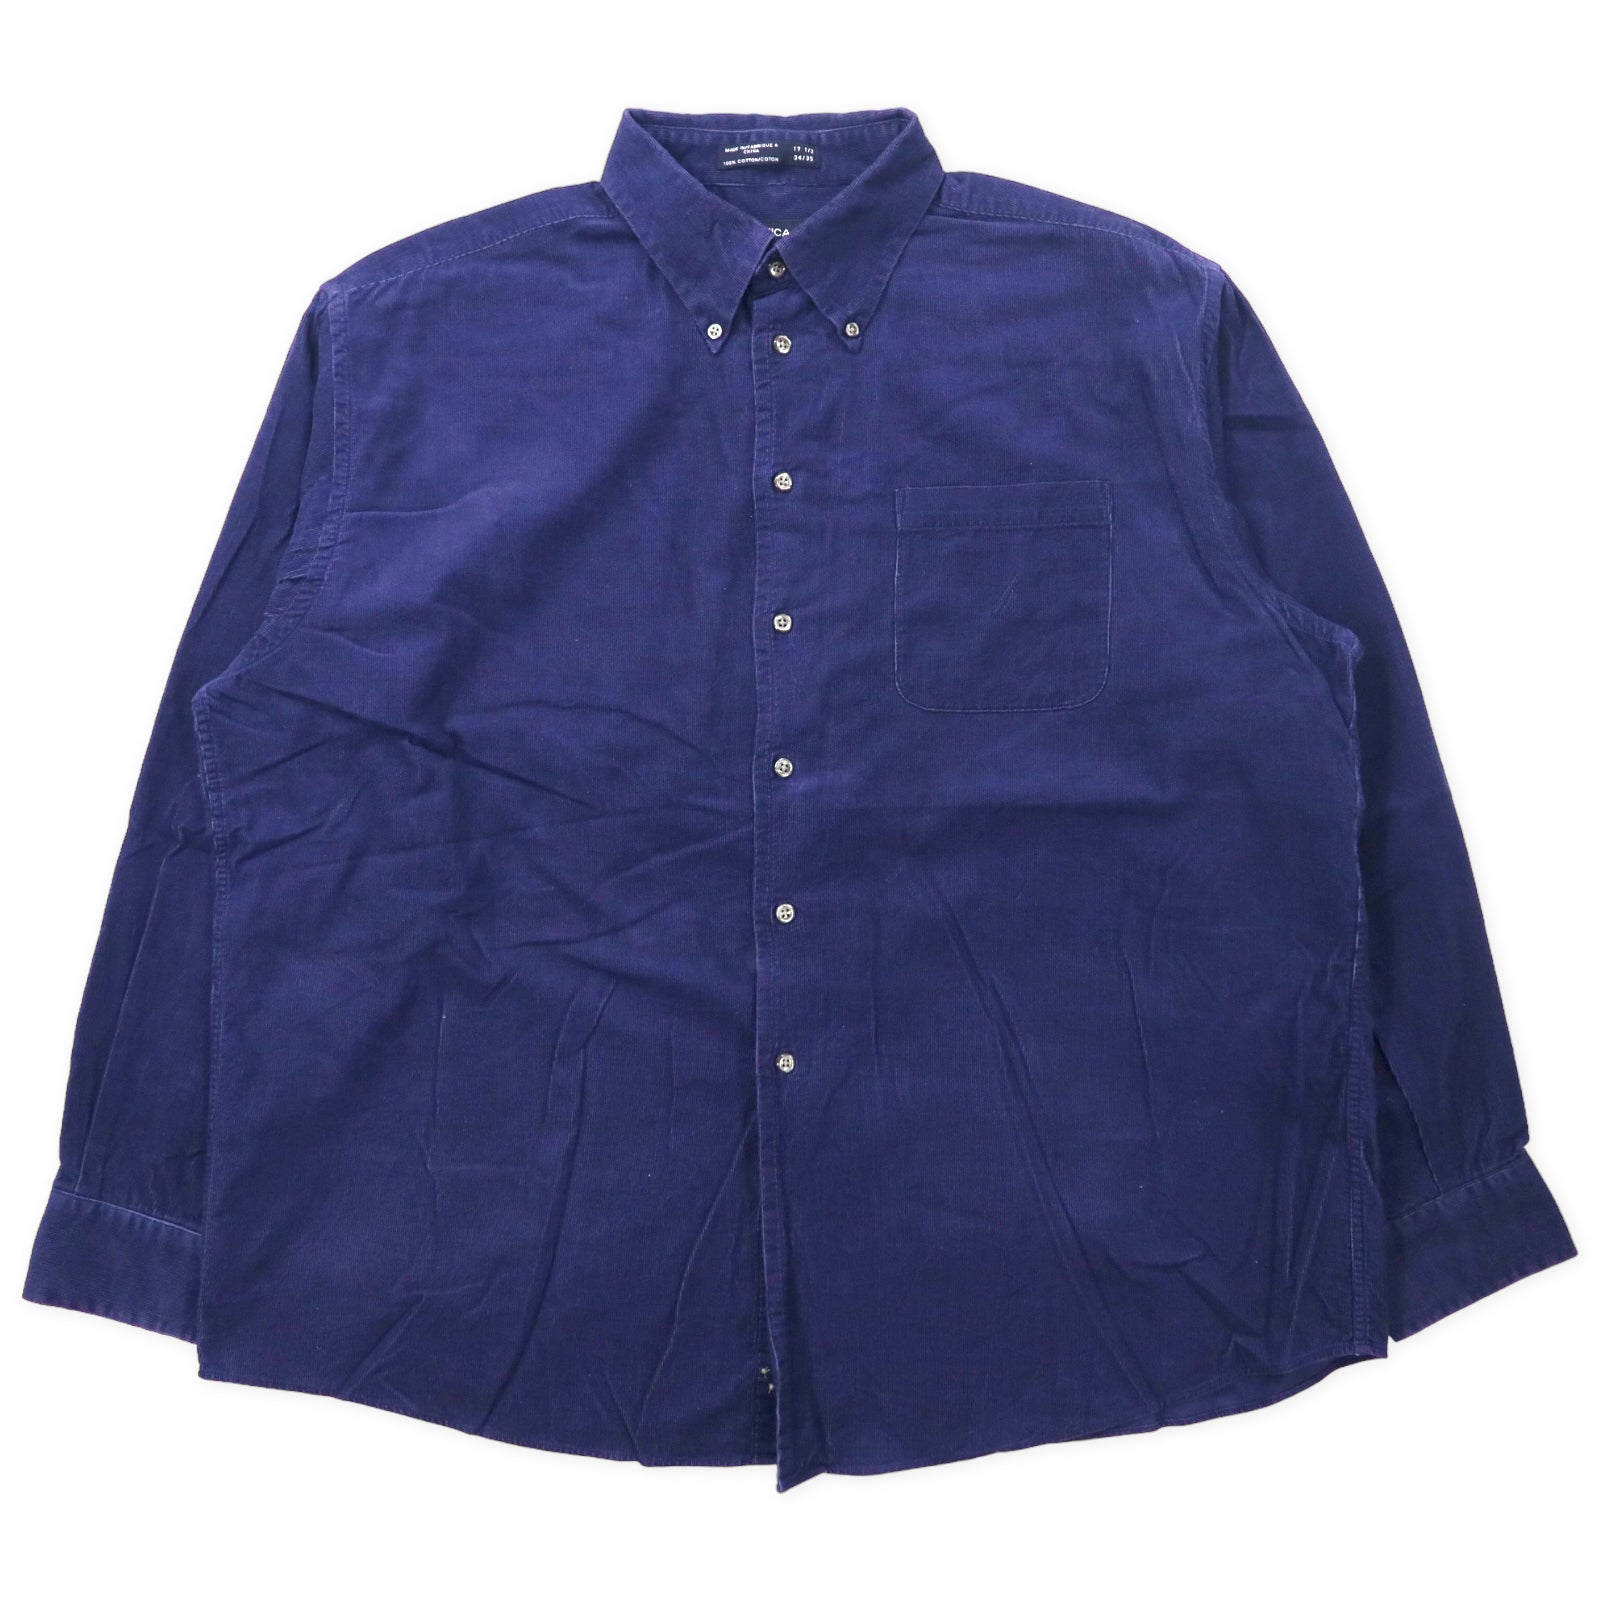 NAUTICA Corduroy Button-Down Shirts 34/35 Navy Cotton One